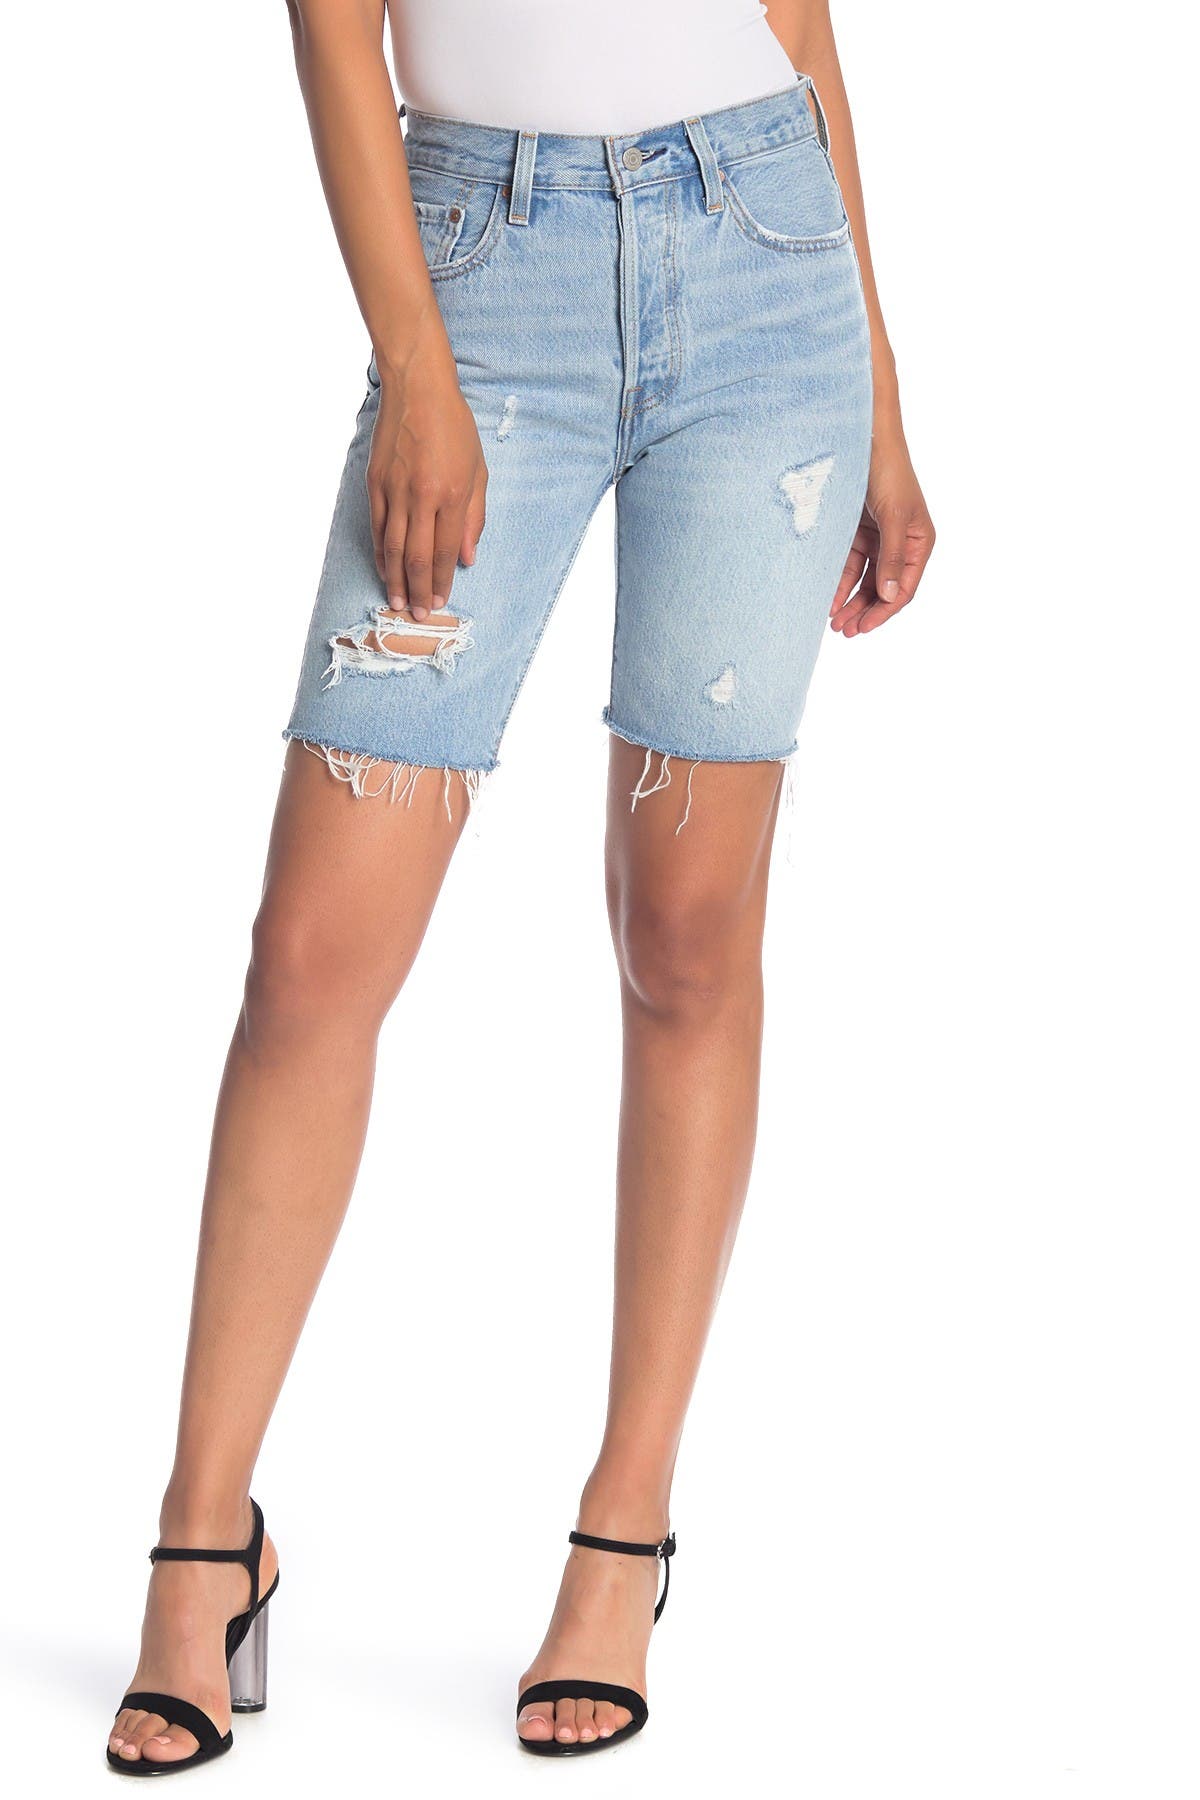 levis 501 bermuda shorts